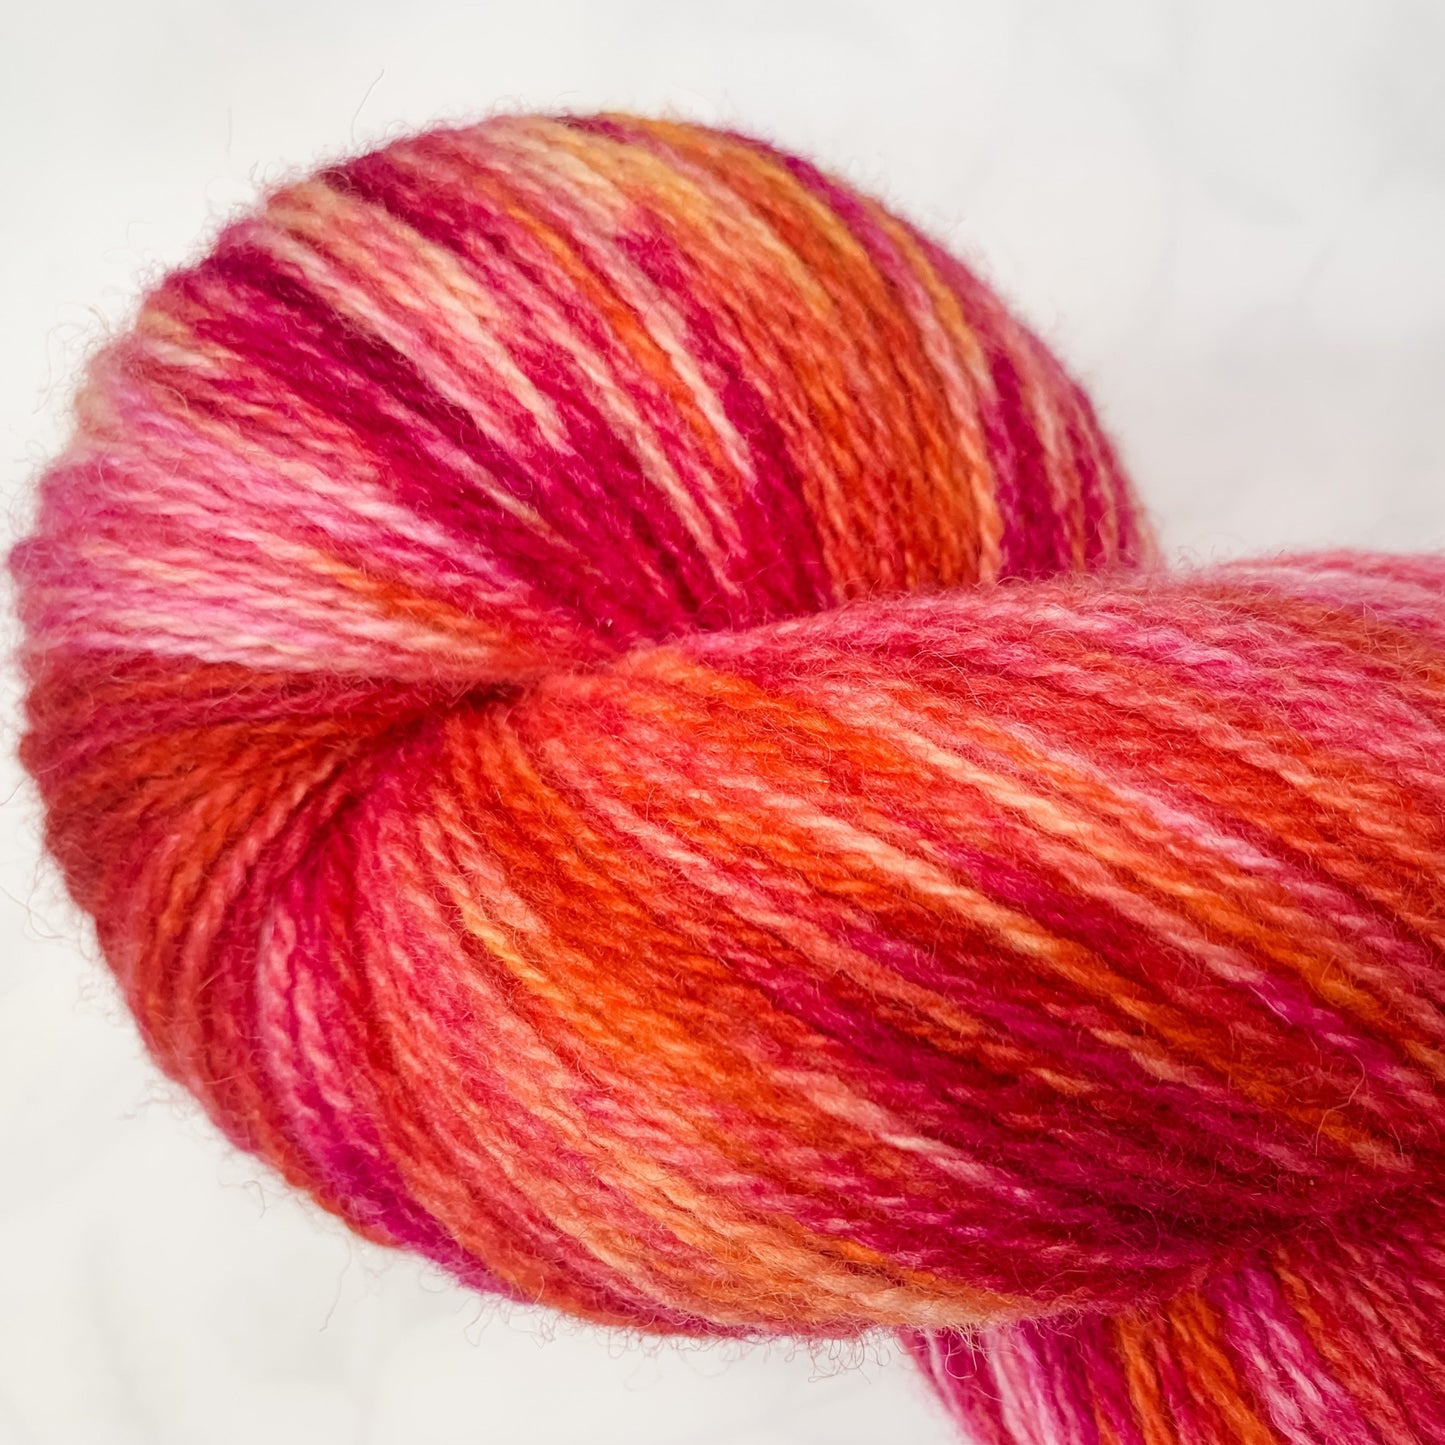 Diva - Trollfjord sock - Variegated Yarn - Hand dyed yarn